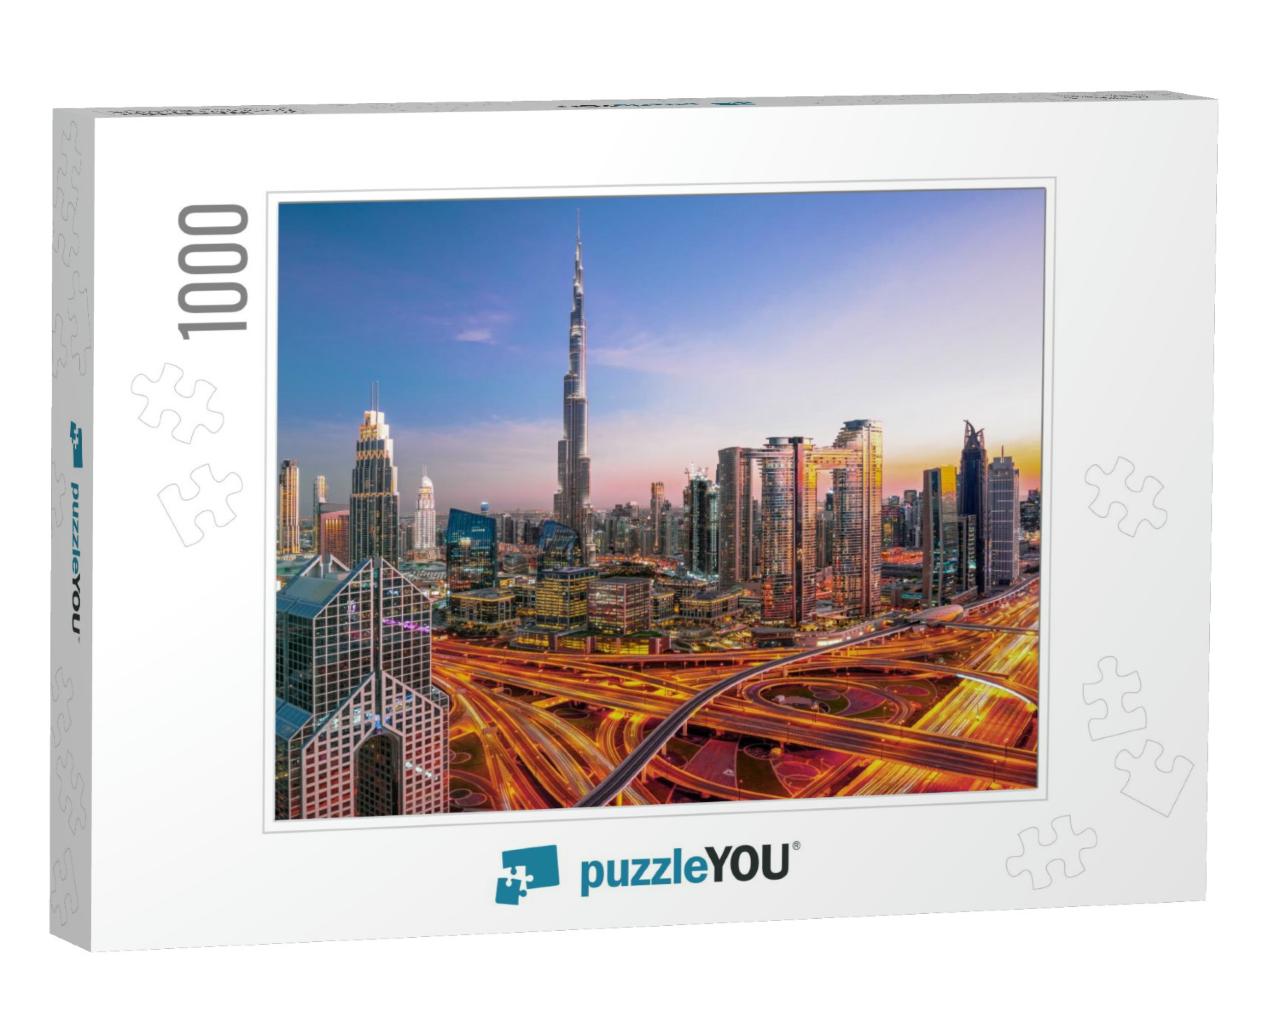 Dubai City Center Skyline - Amazing Cityscape with Luxury... Jigsaw Puzzle with 1000 pieces